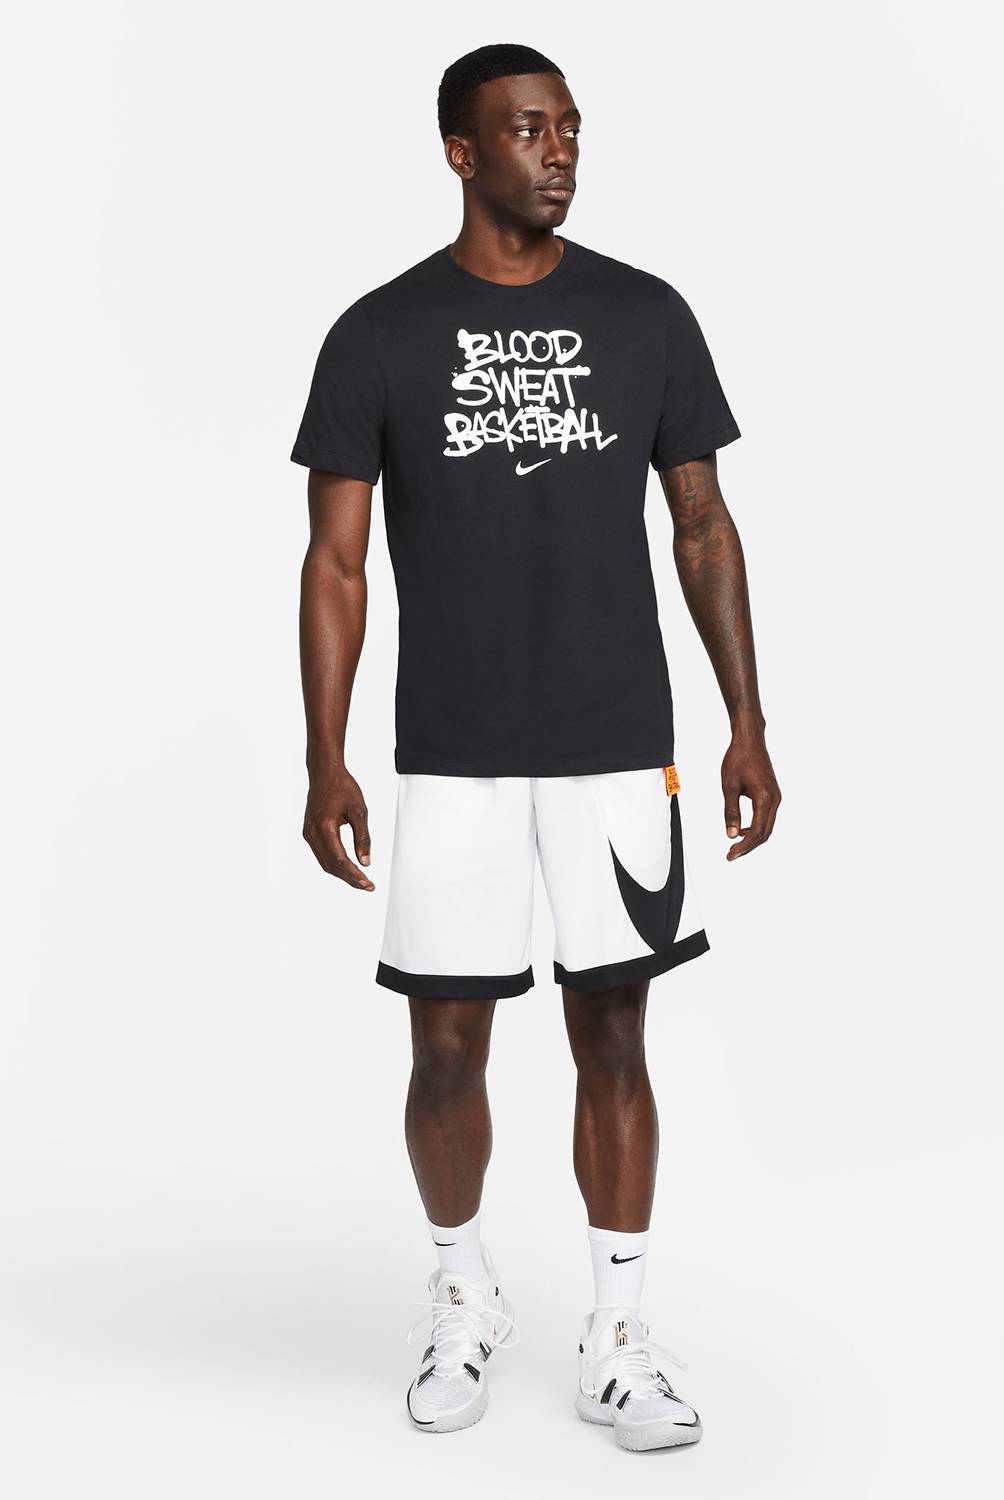 NIKE - Camiseta deportiva Básquetbol Nike Hombre